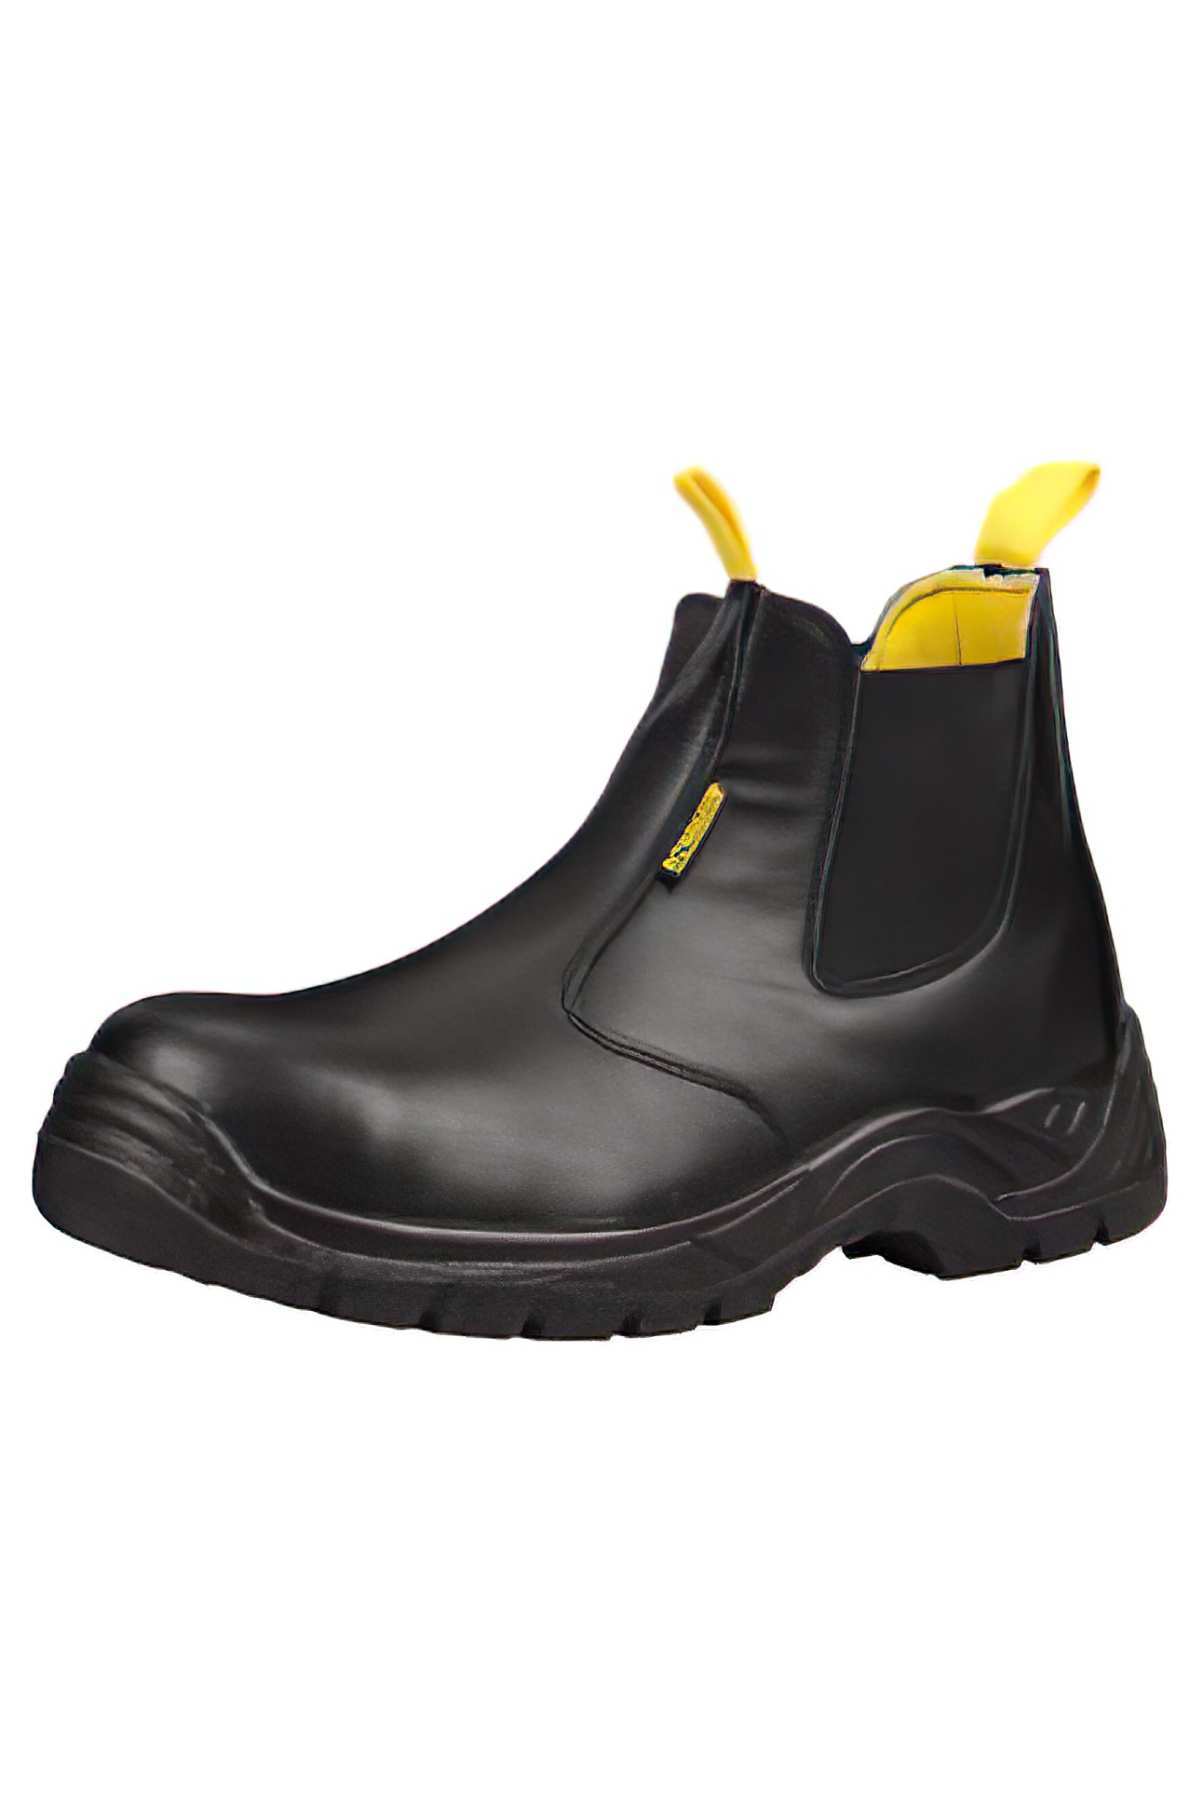 RTRMAX RHS2843 Güvenlik Ayakkabısı 